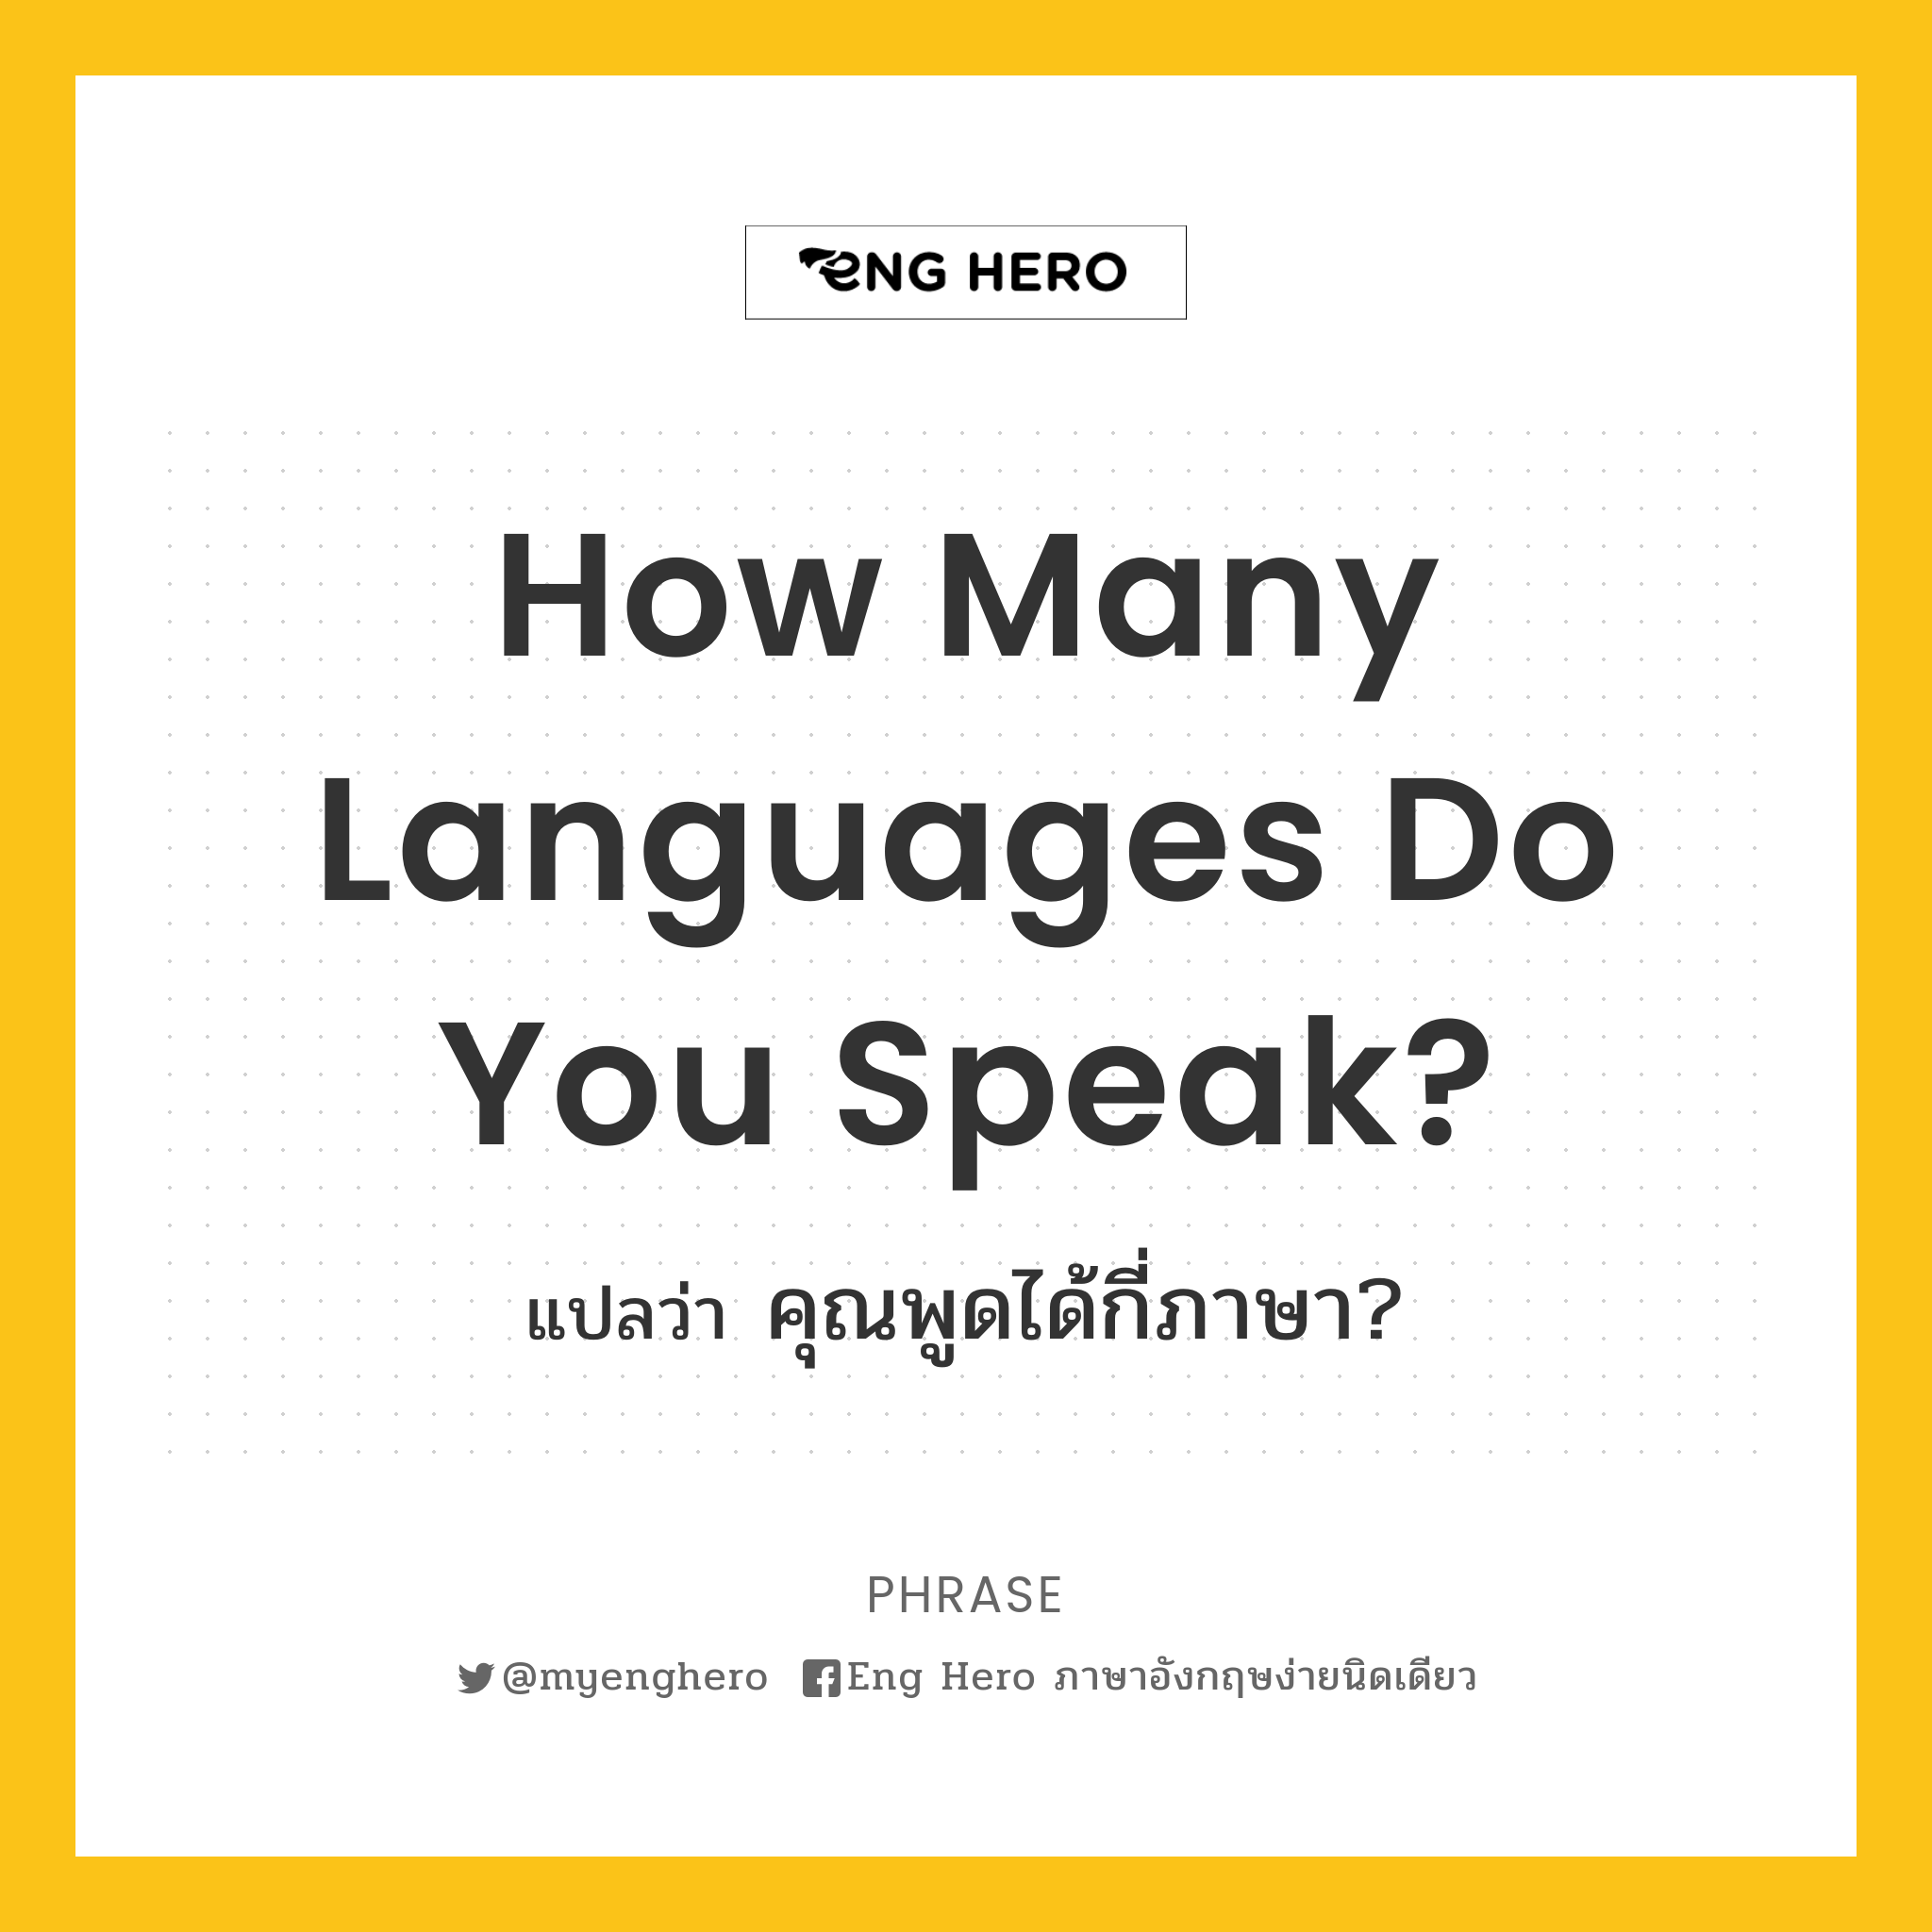 How many languages do you speak?